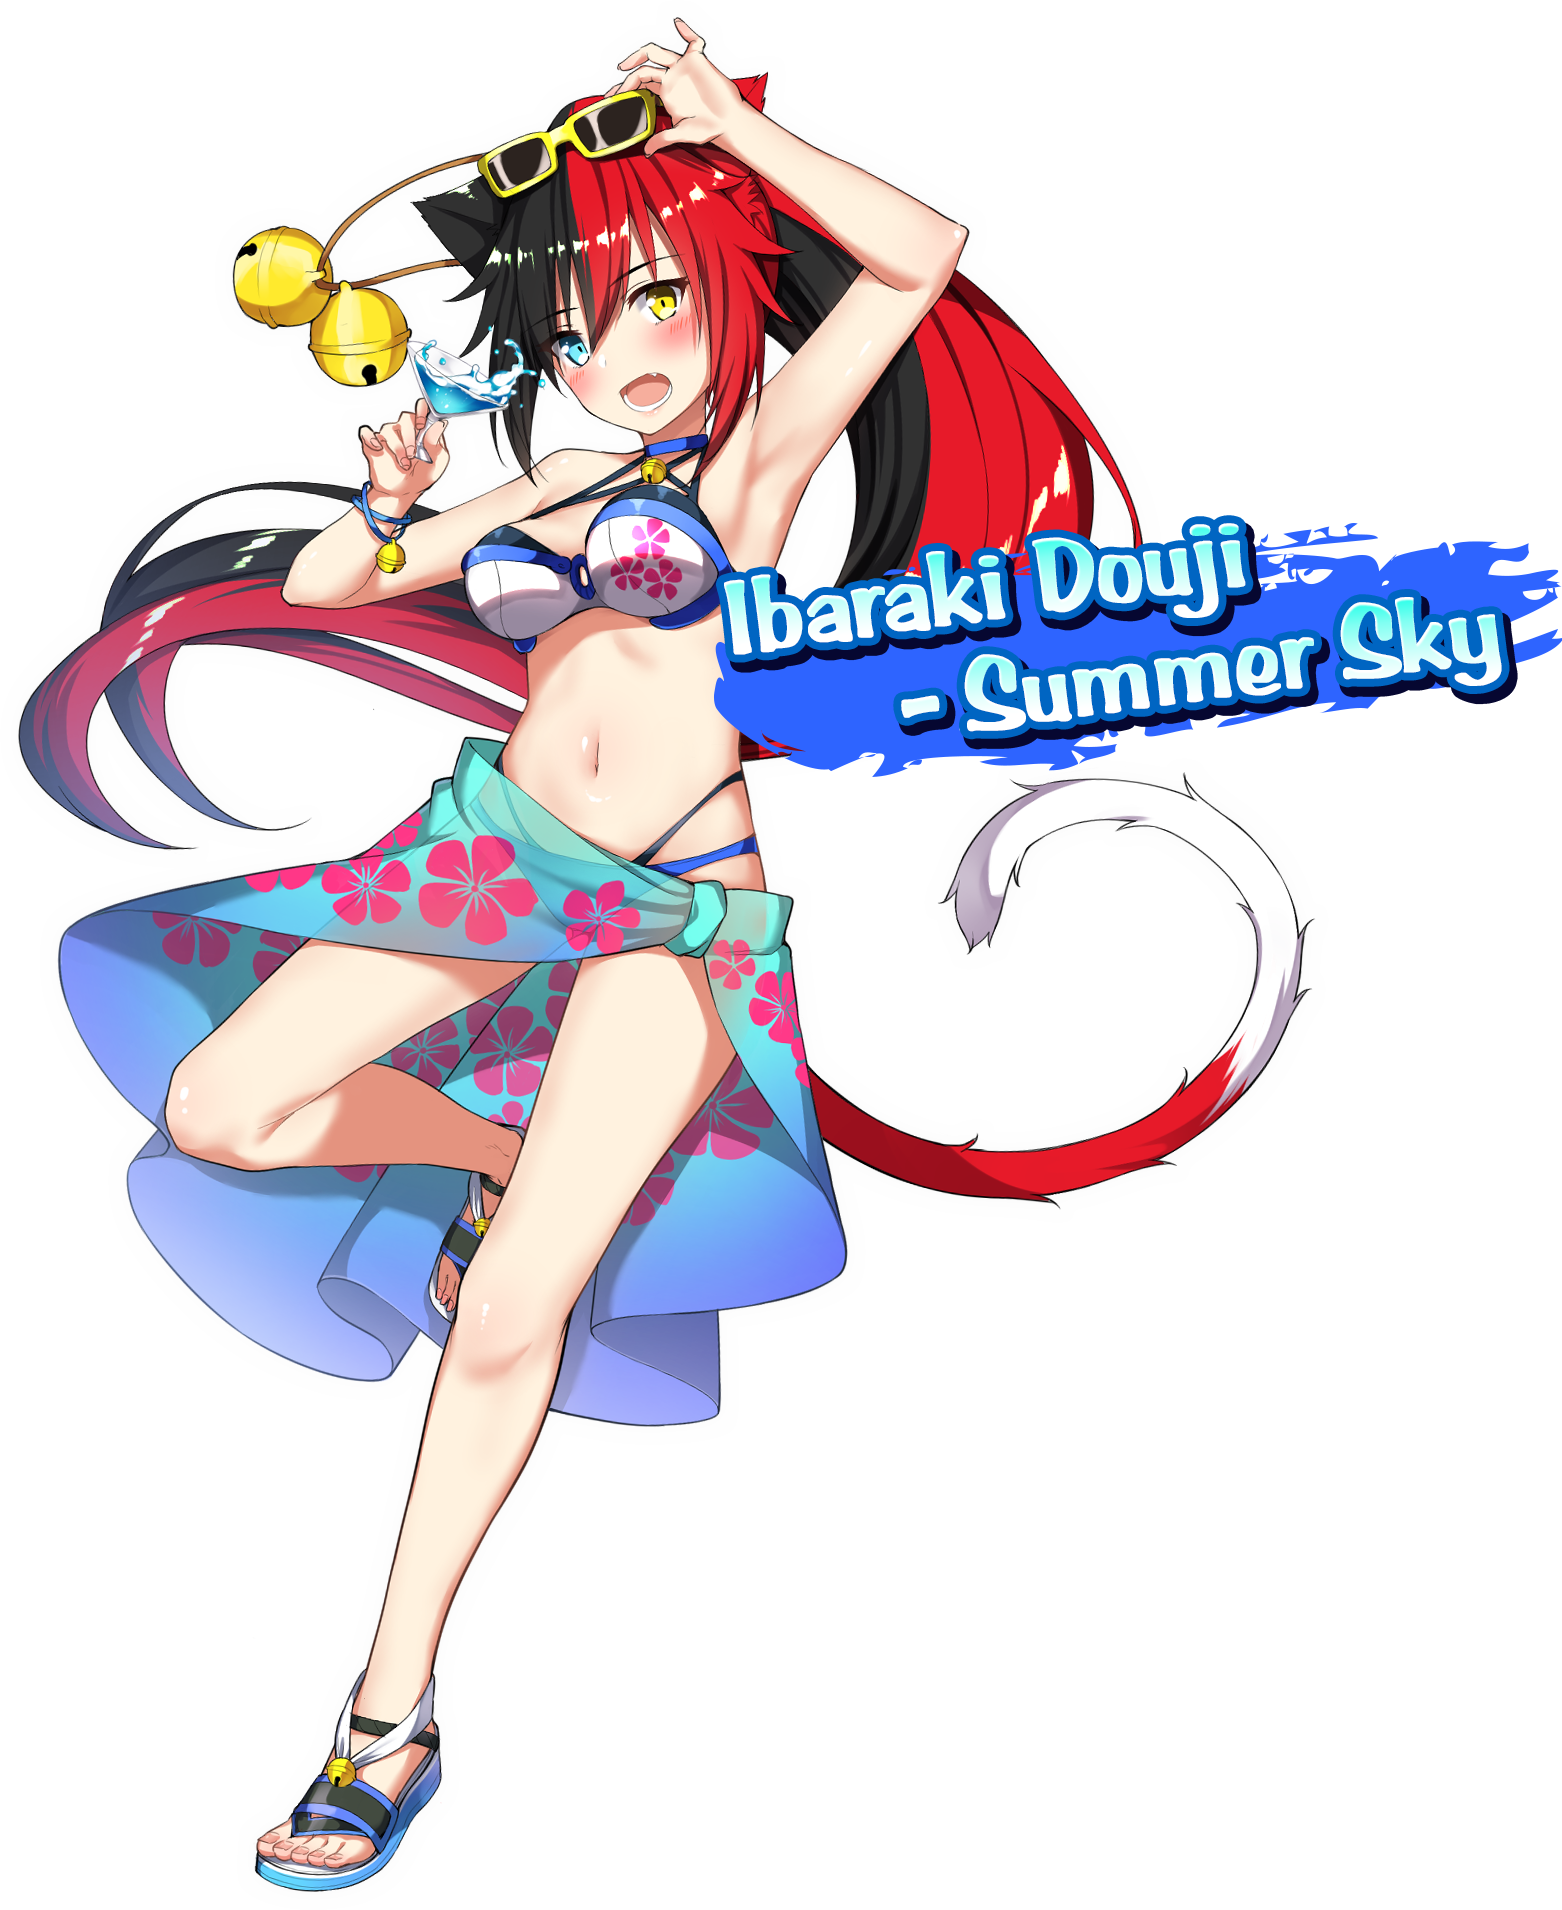 Ibaraki Douji - Summer Sky